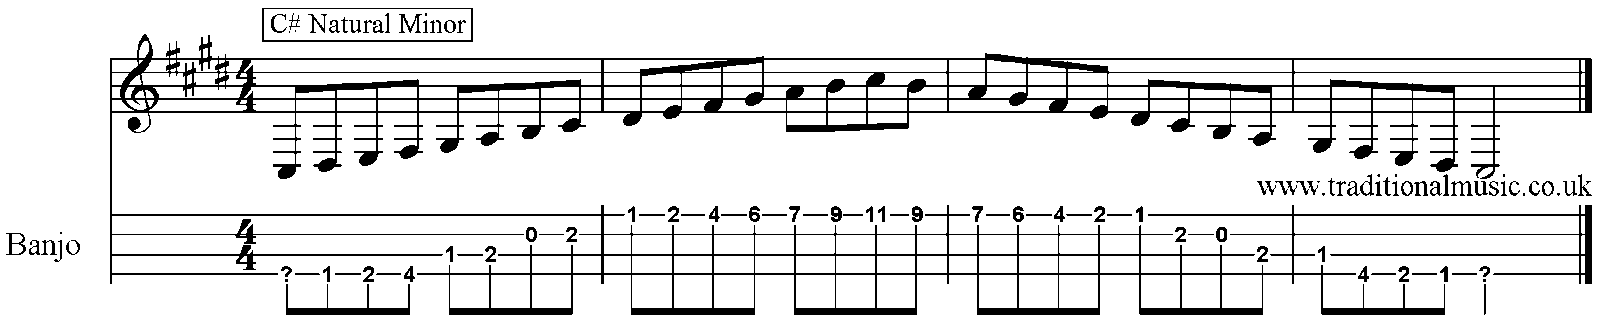 Minor Scales for Banjo C# 